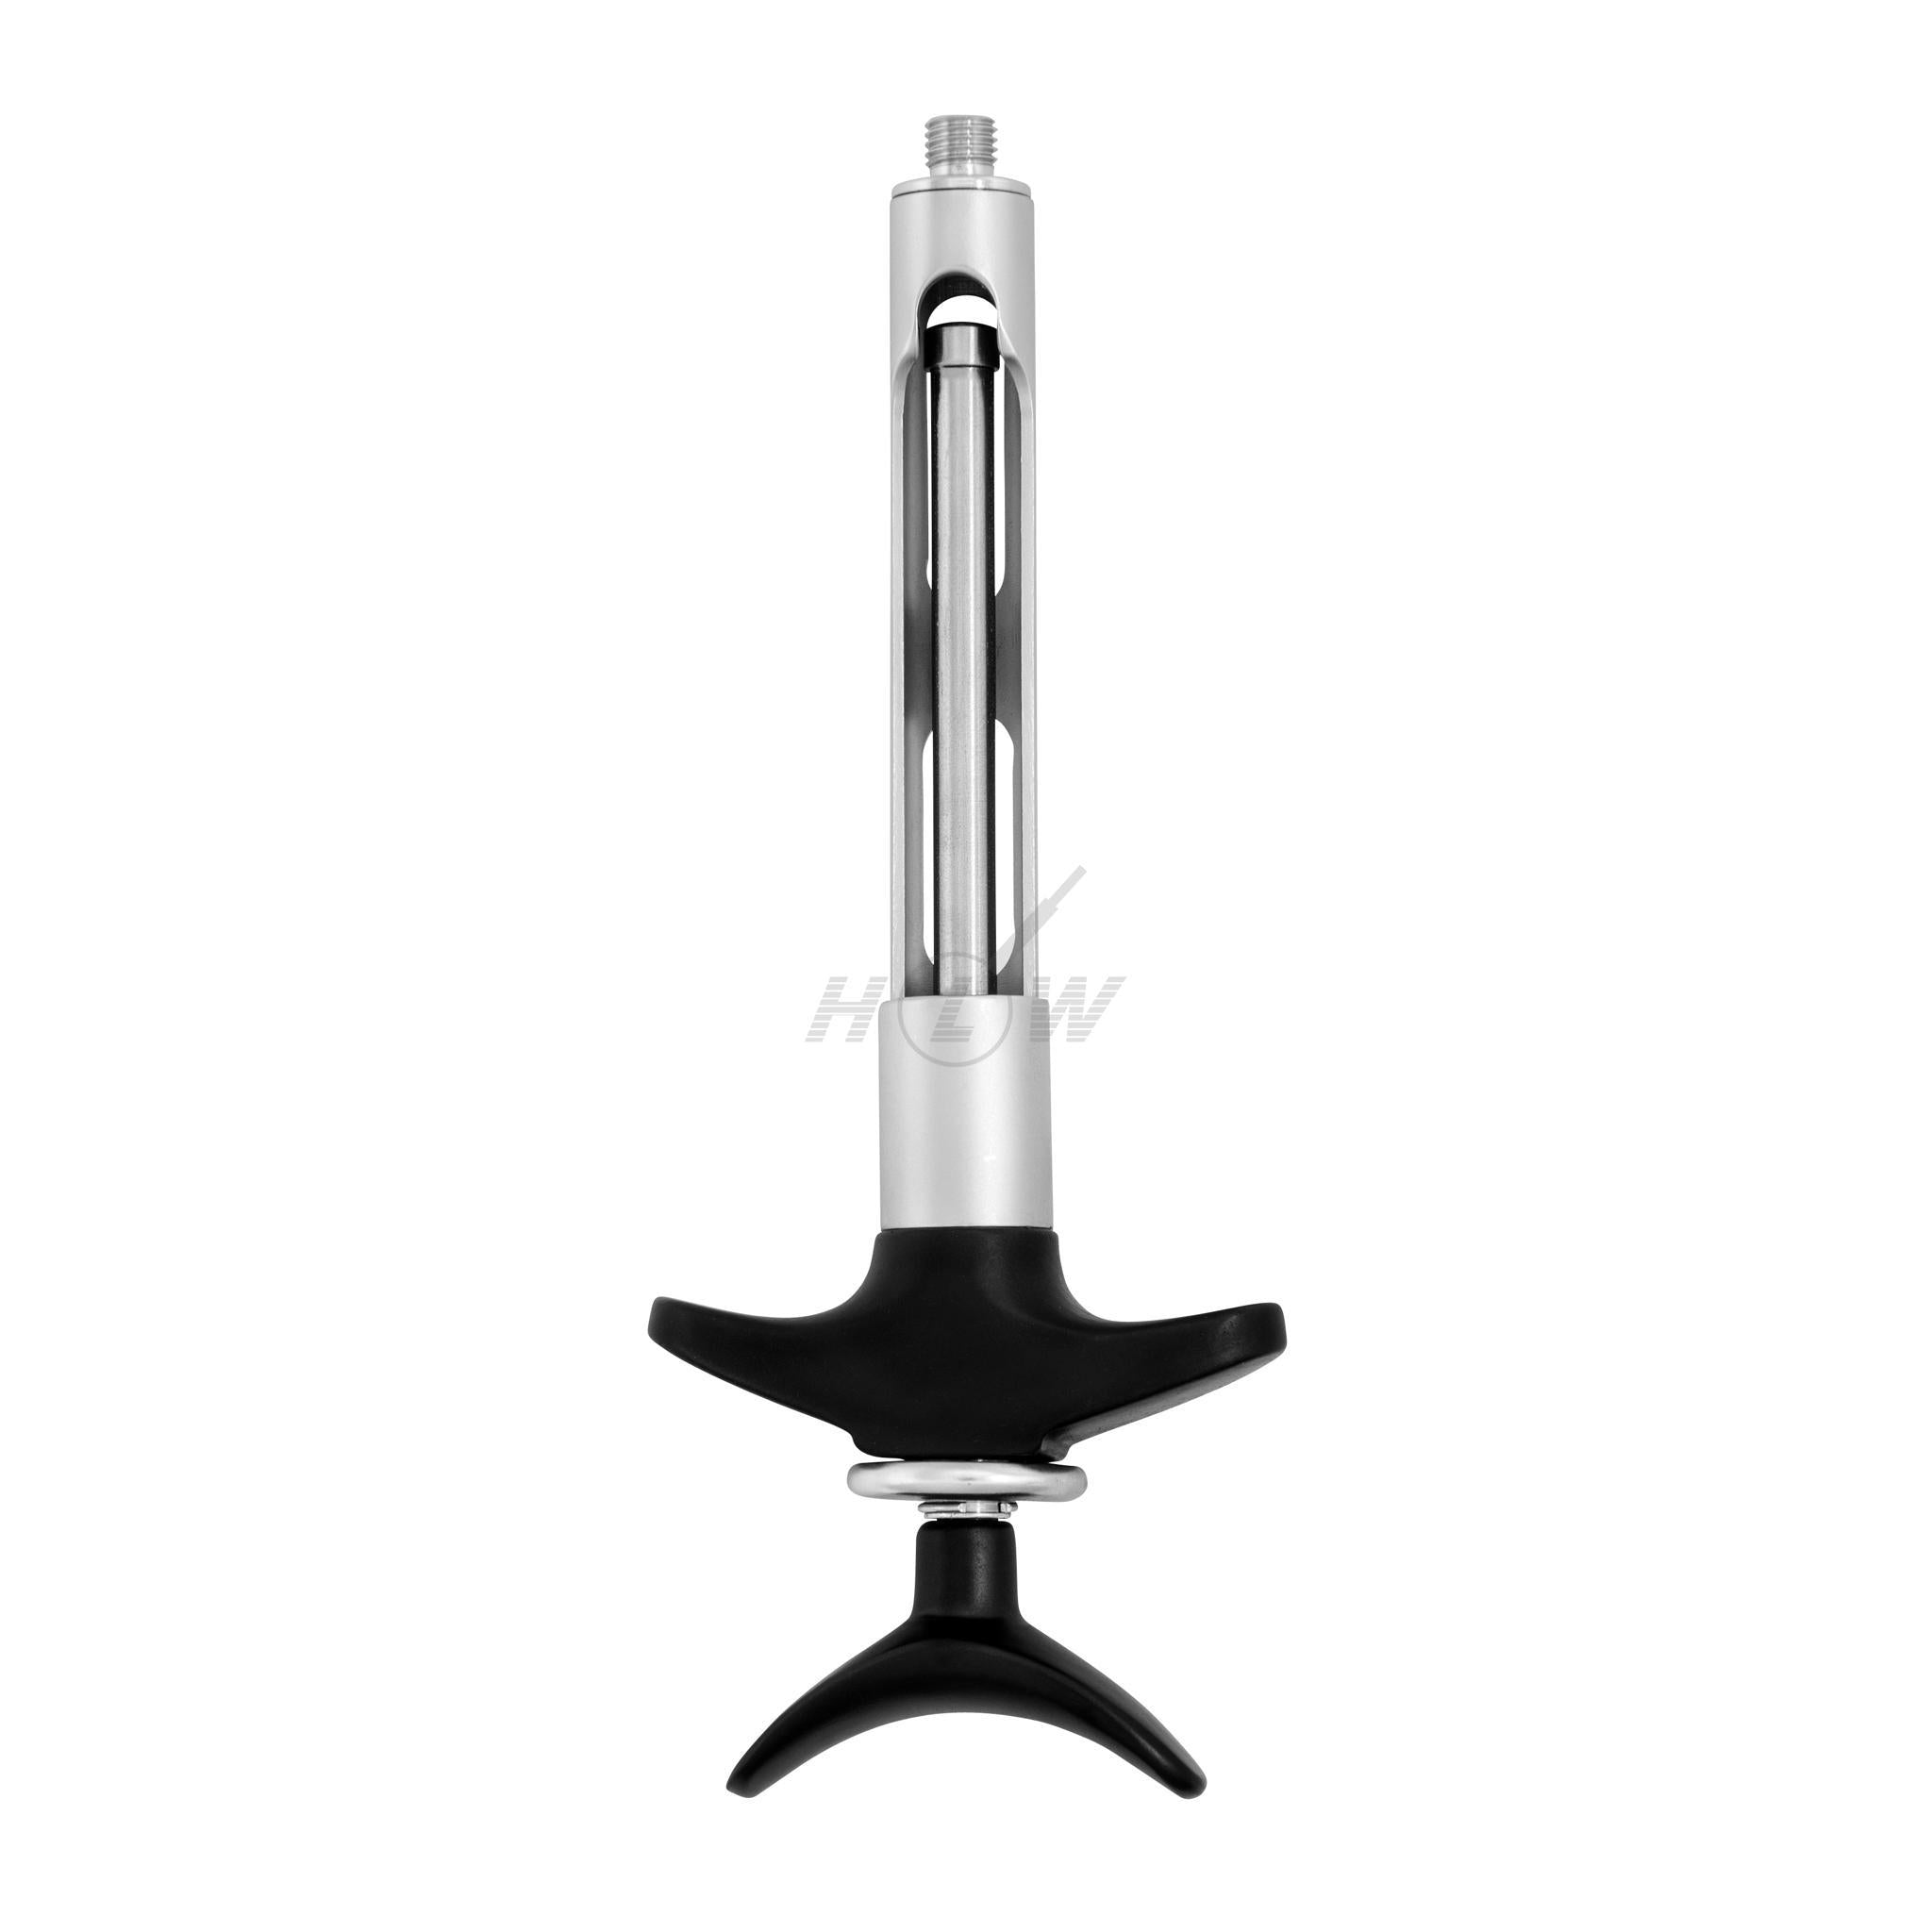 Cylinder ampoule syringe self-aspirating